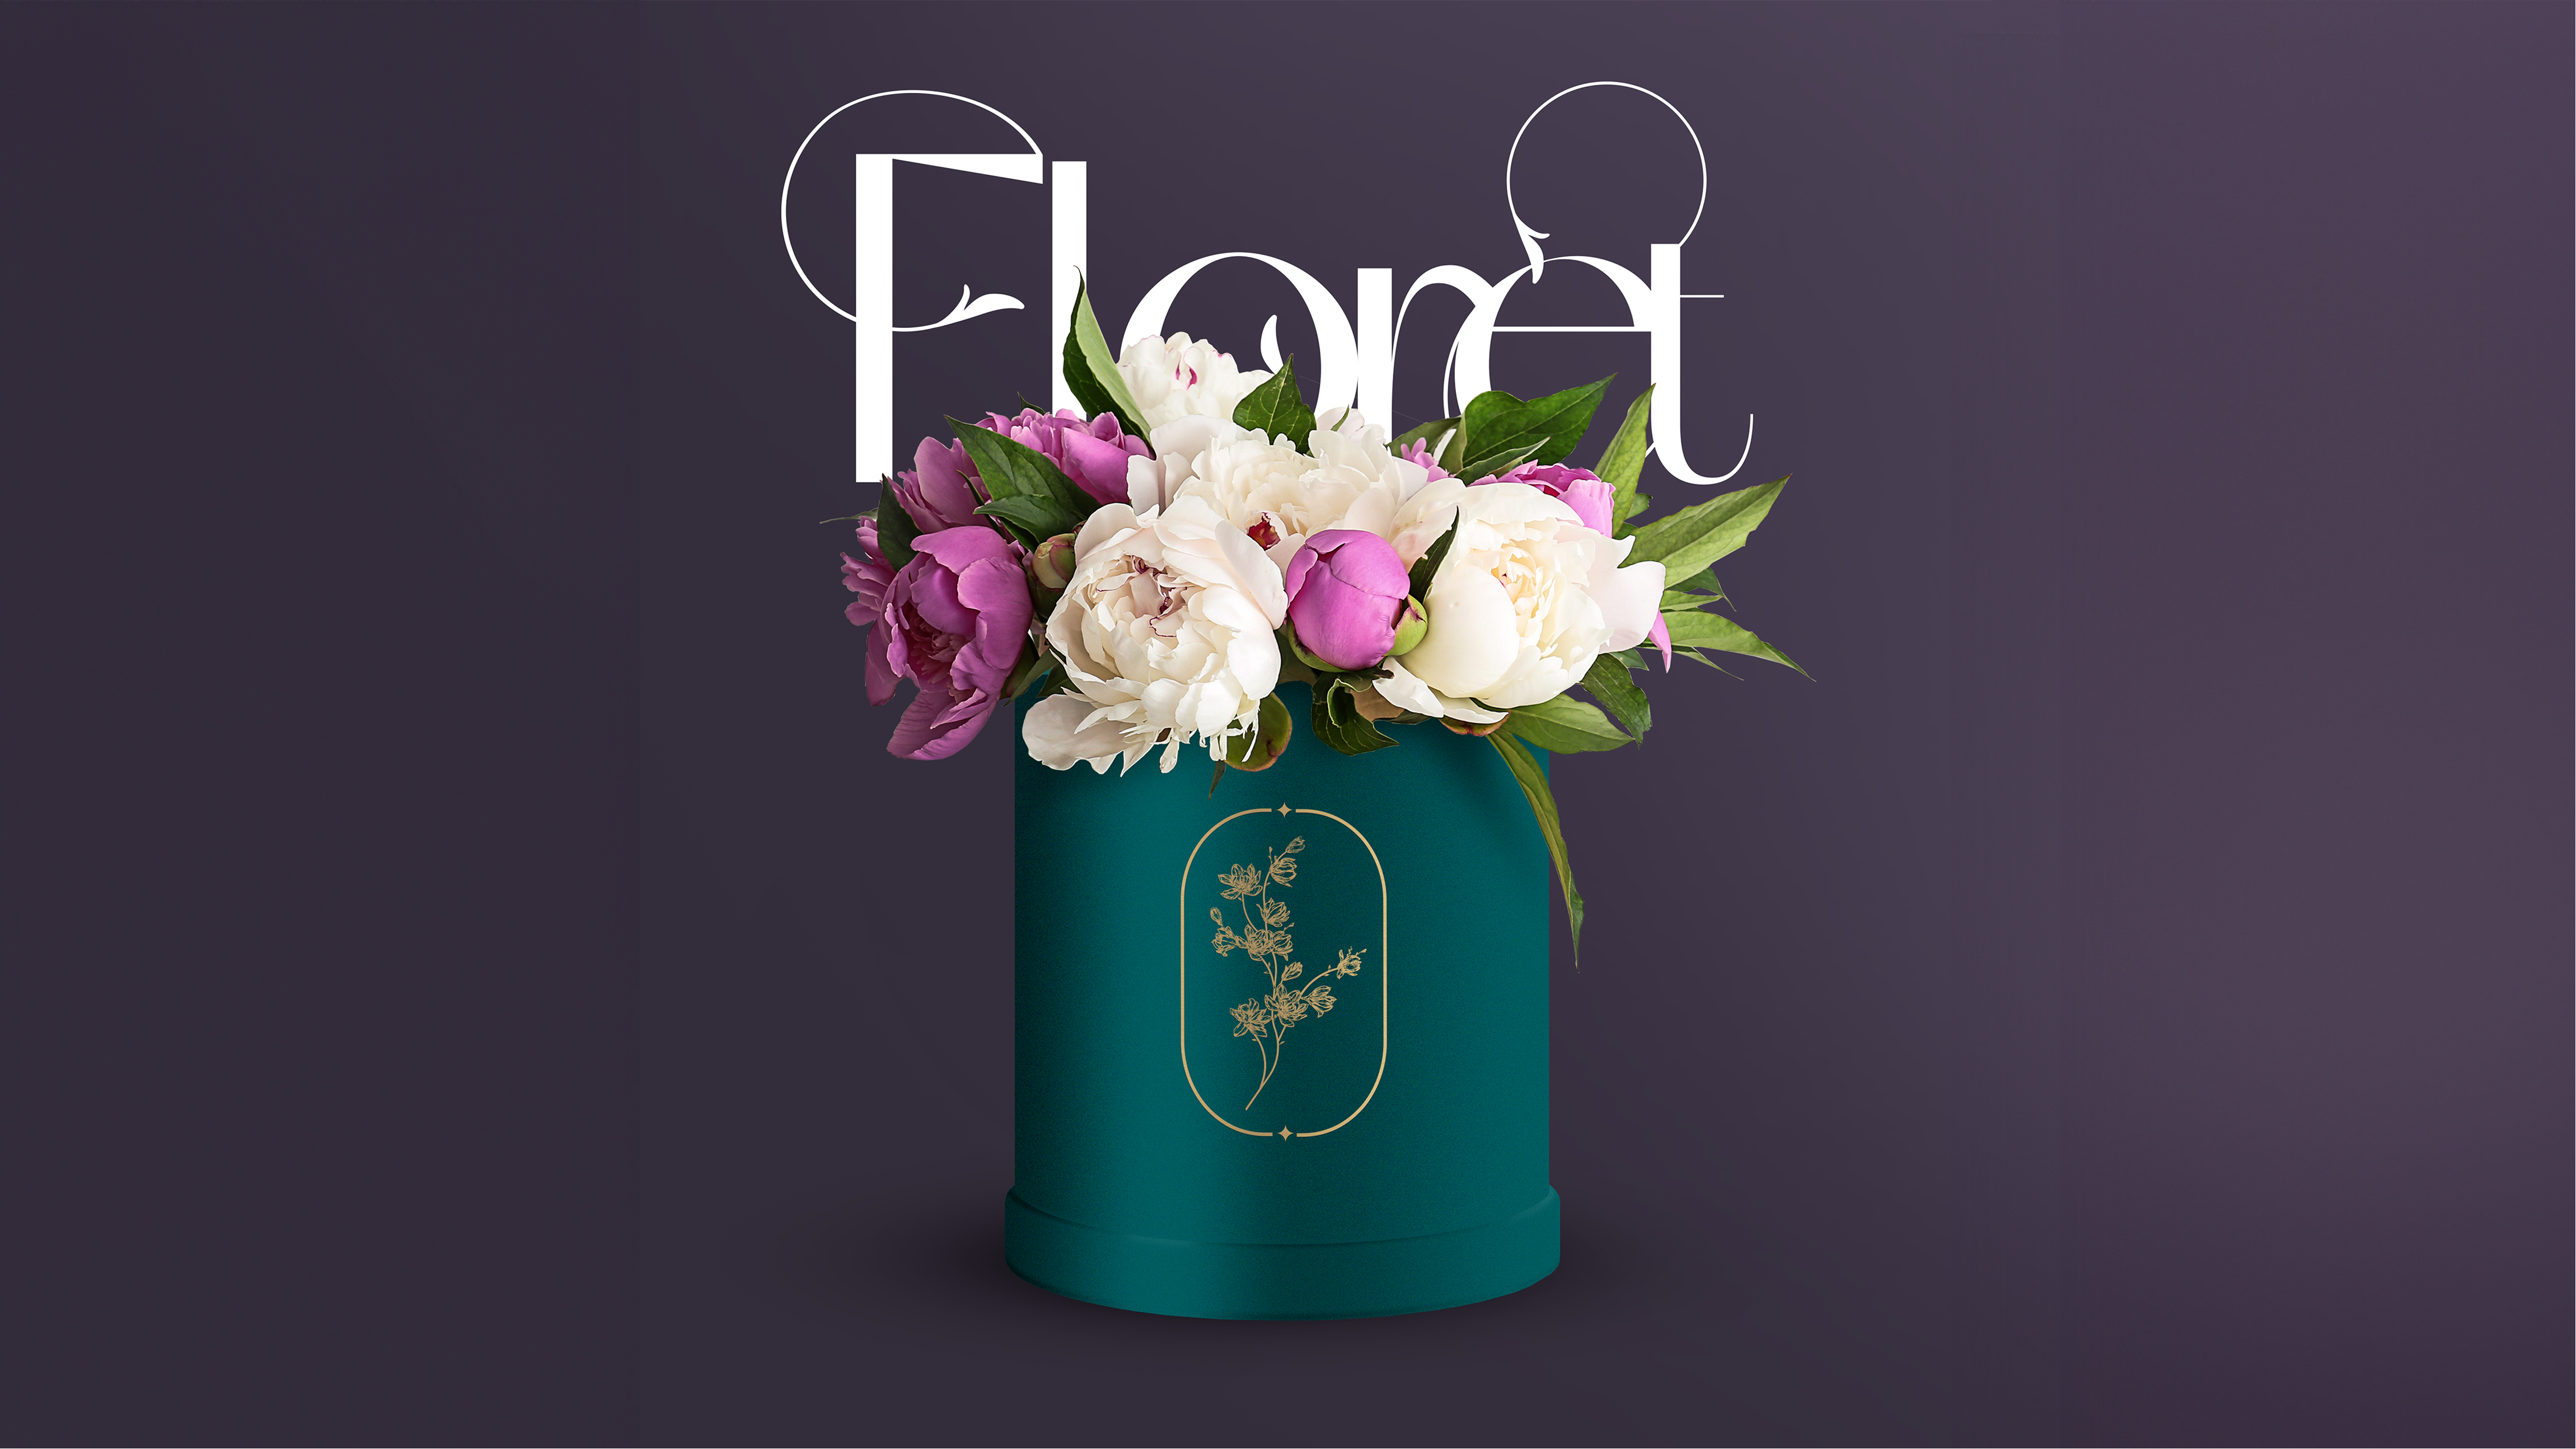 Floret – Graves in Bloom (Brand Creation)